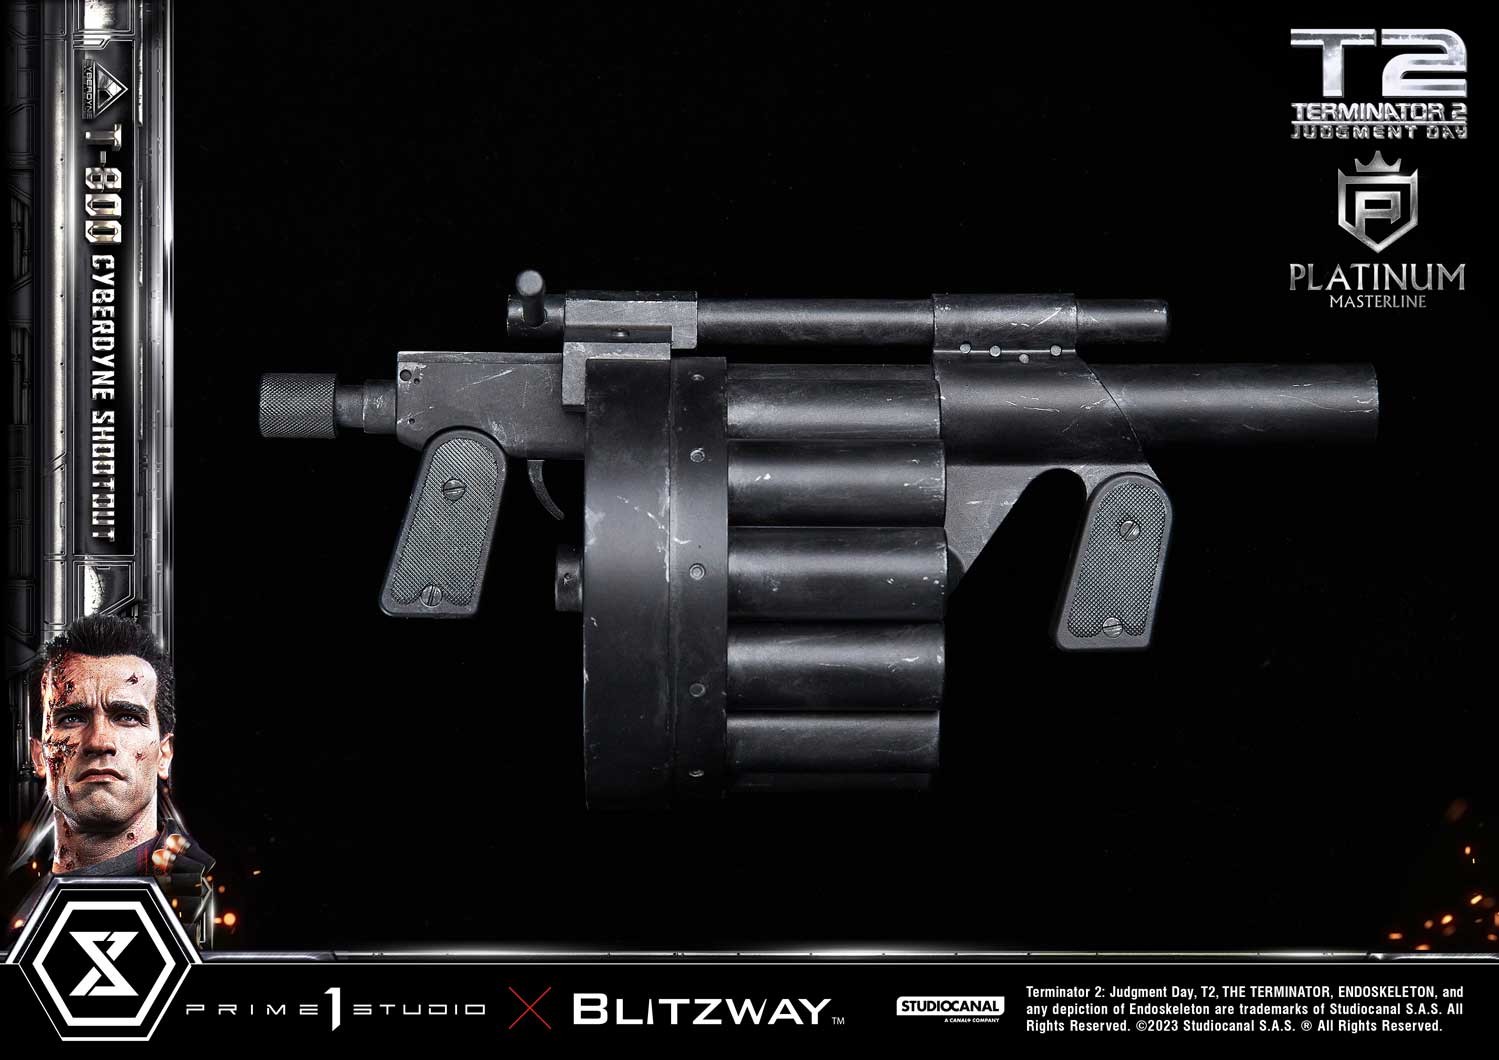 Terminator 2 3D: Battle Across Time T-70 Terminator gun (Hollywood variant)  original prop weapon